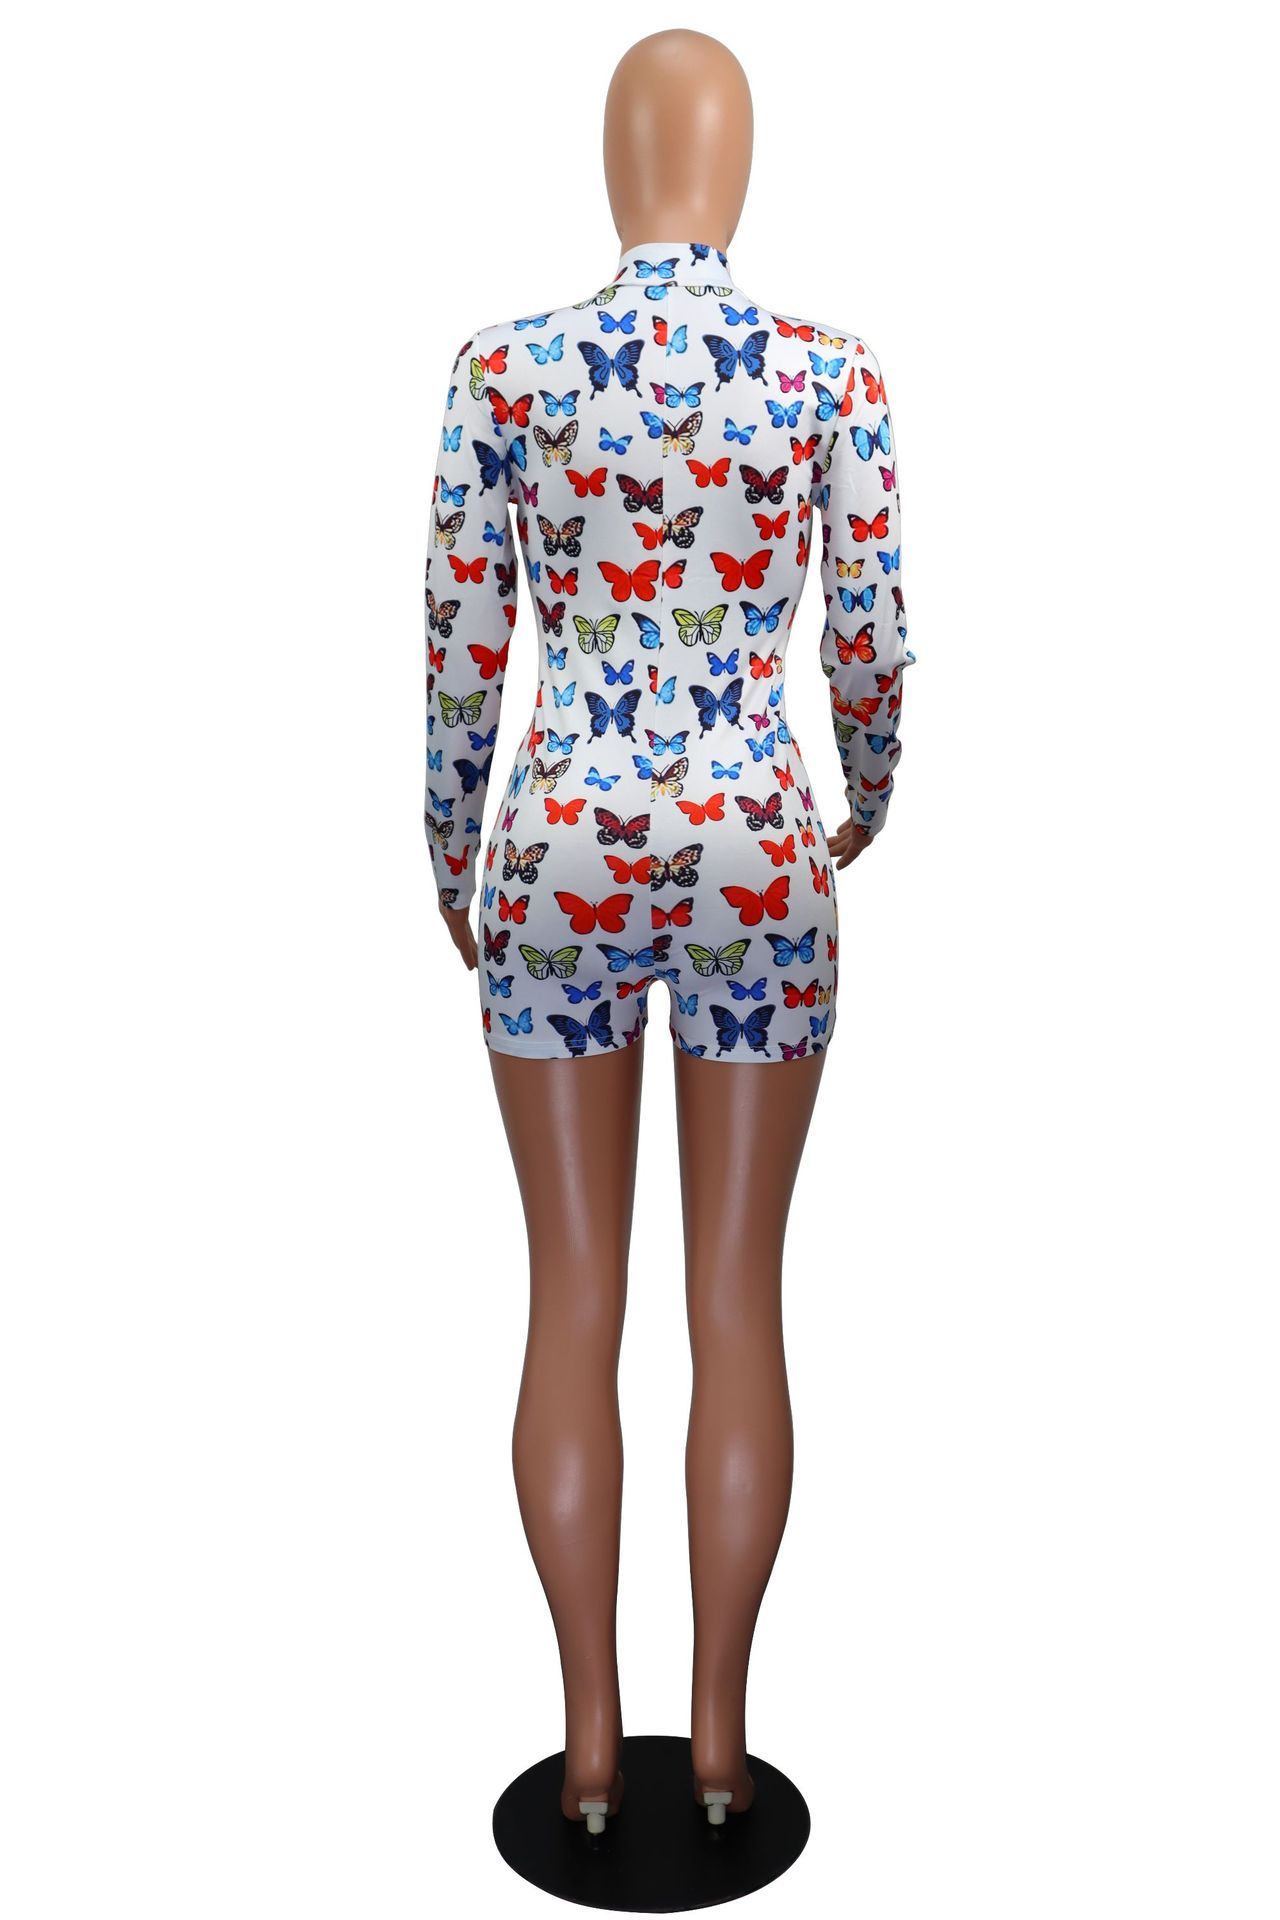 V-neck Printed Sheath Skirt Long Sleeve Jumpsuit - Plush Fashions Shop 